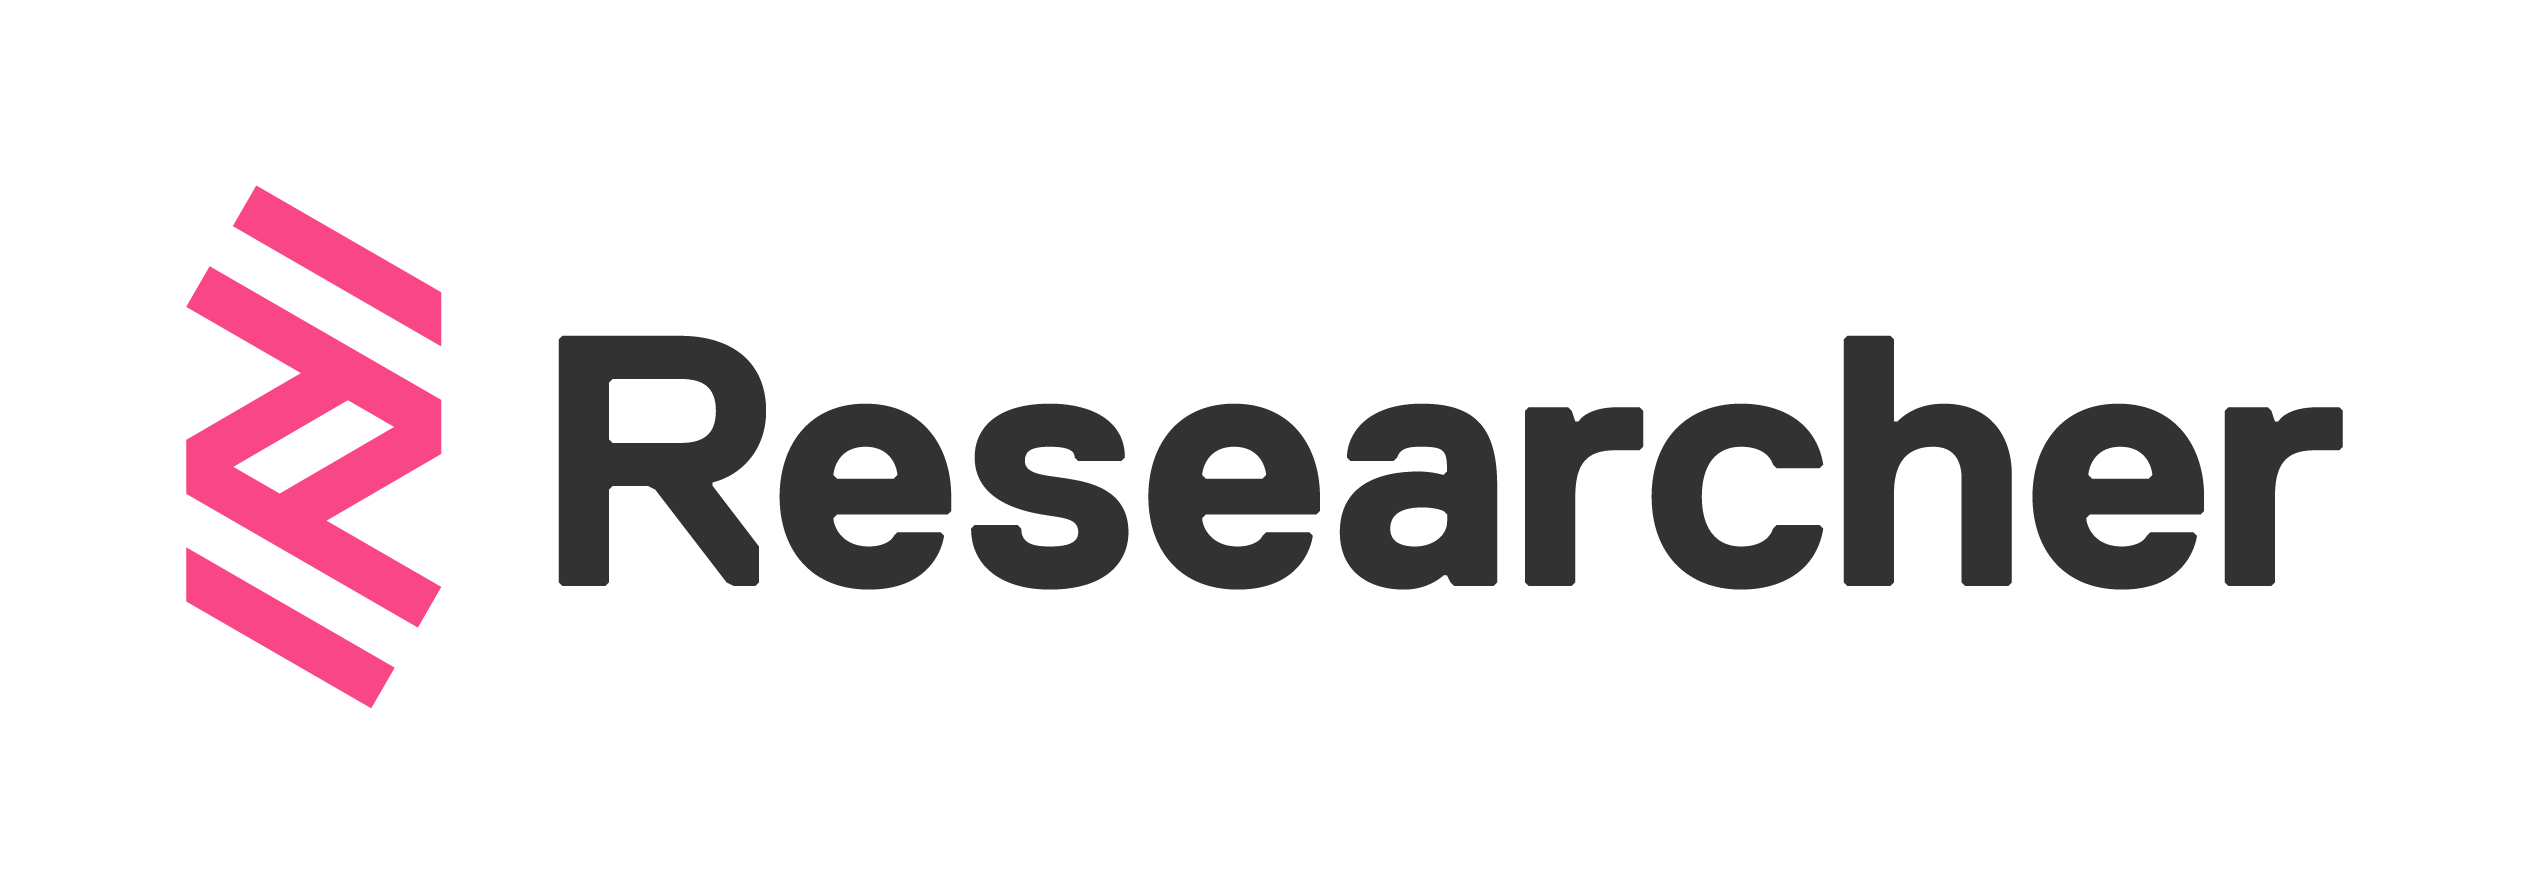 Researcher Logo